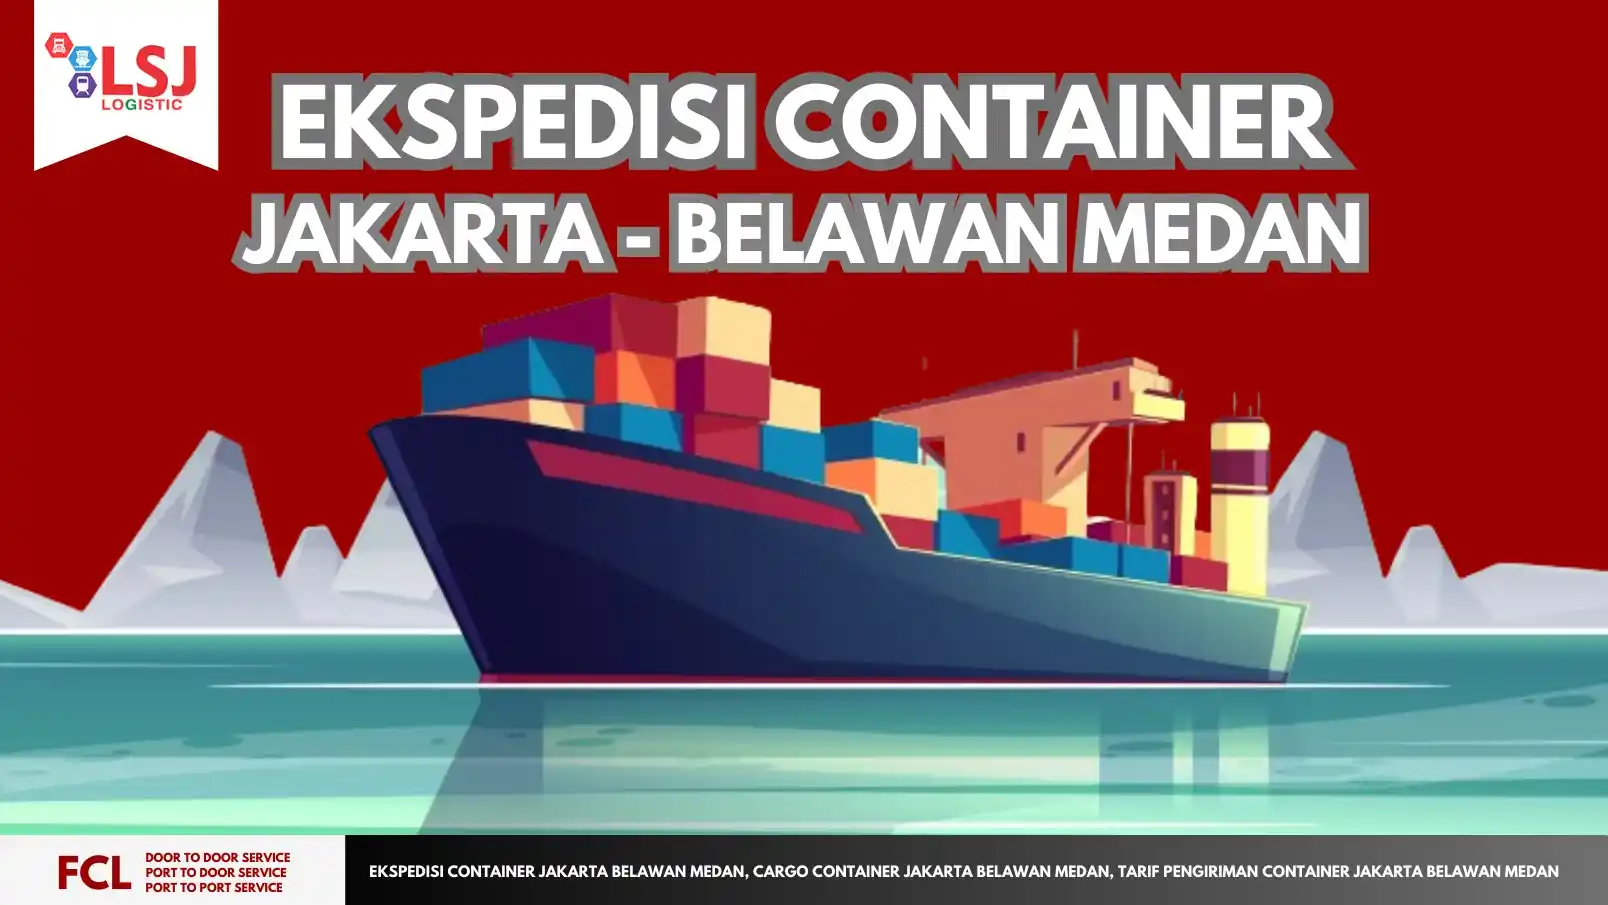 Cargo Container Jakarta Belawan Medan